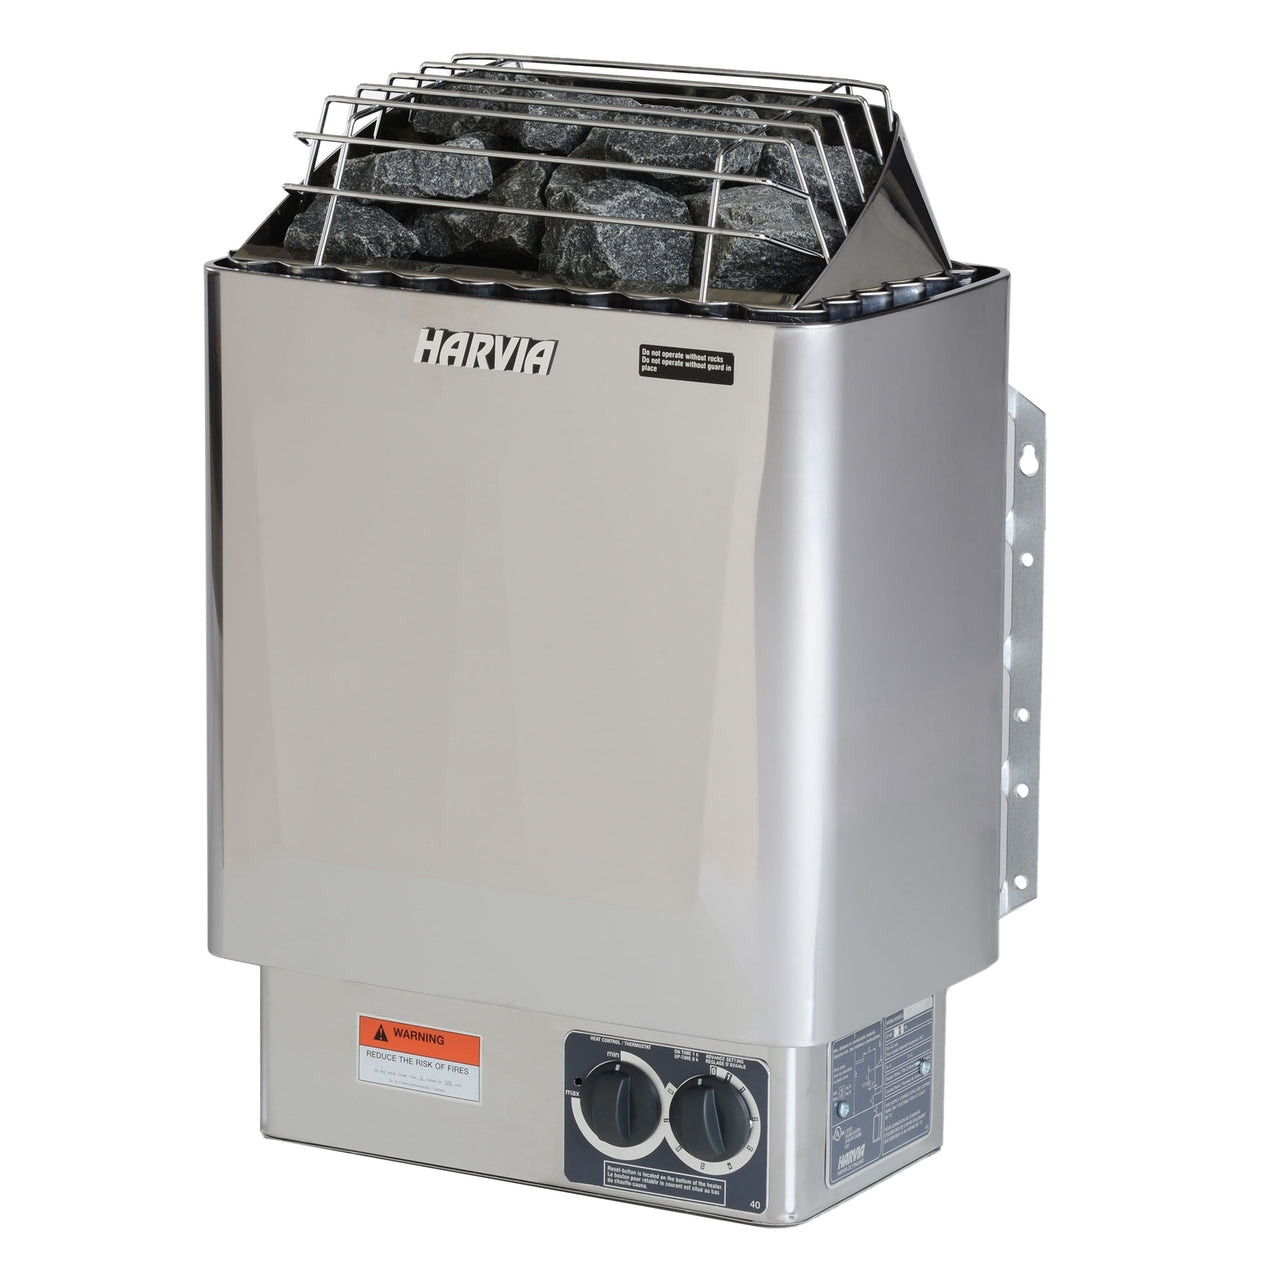 Aleko Harvia KIP Wet Dry Sauna Heater Stove - Digital Controller - 4.5 kW